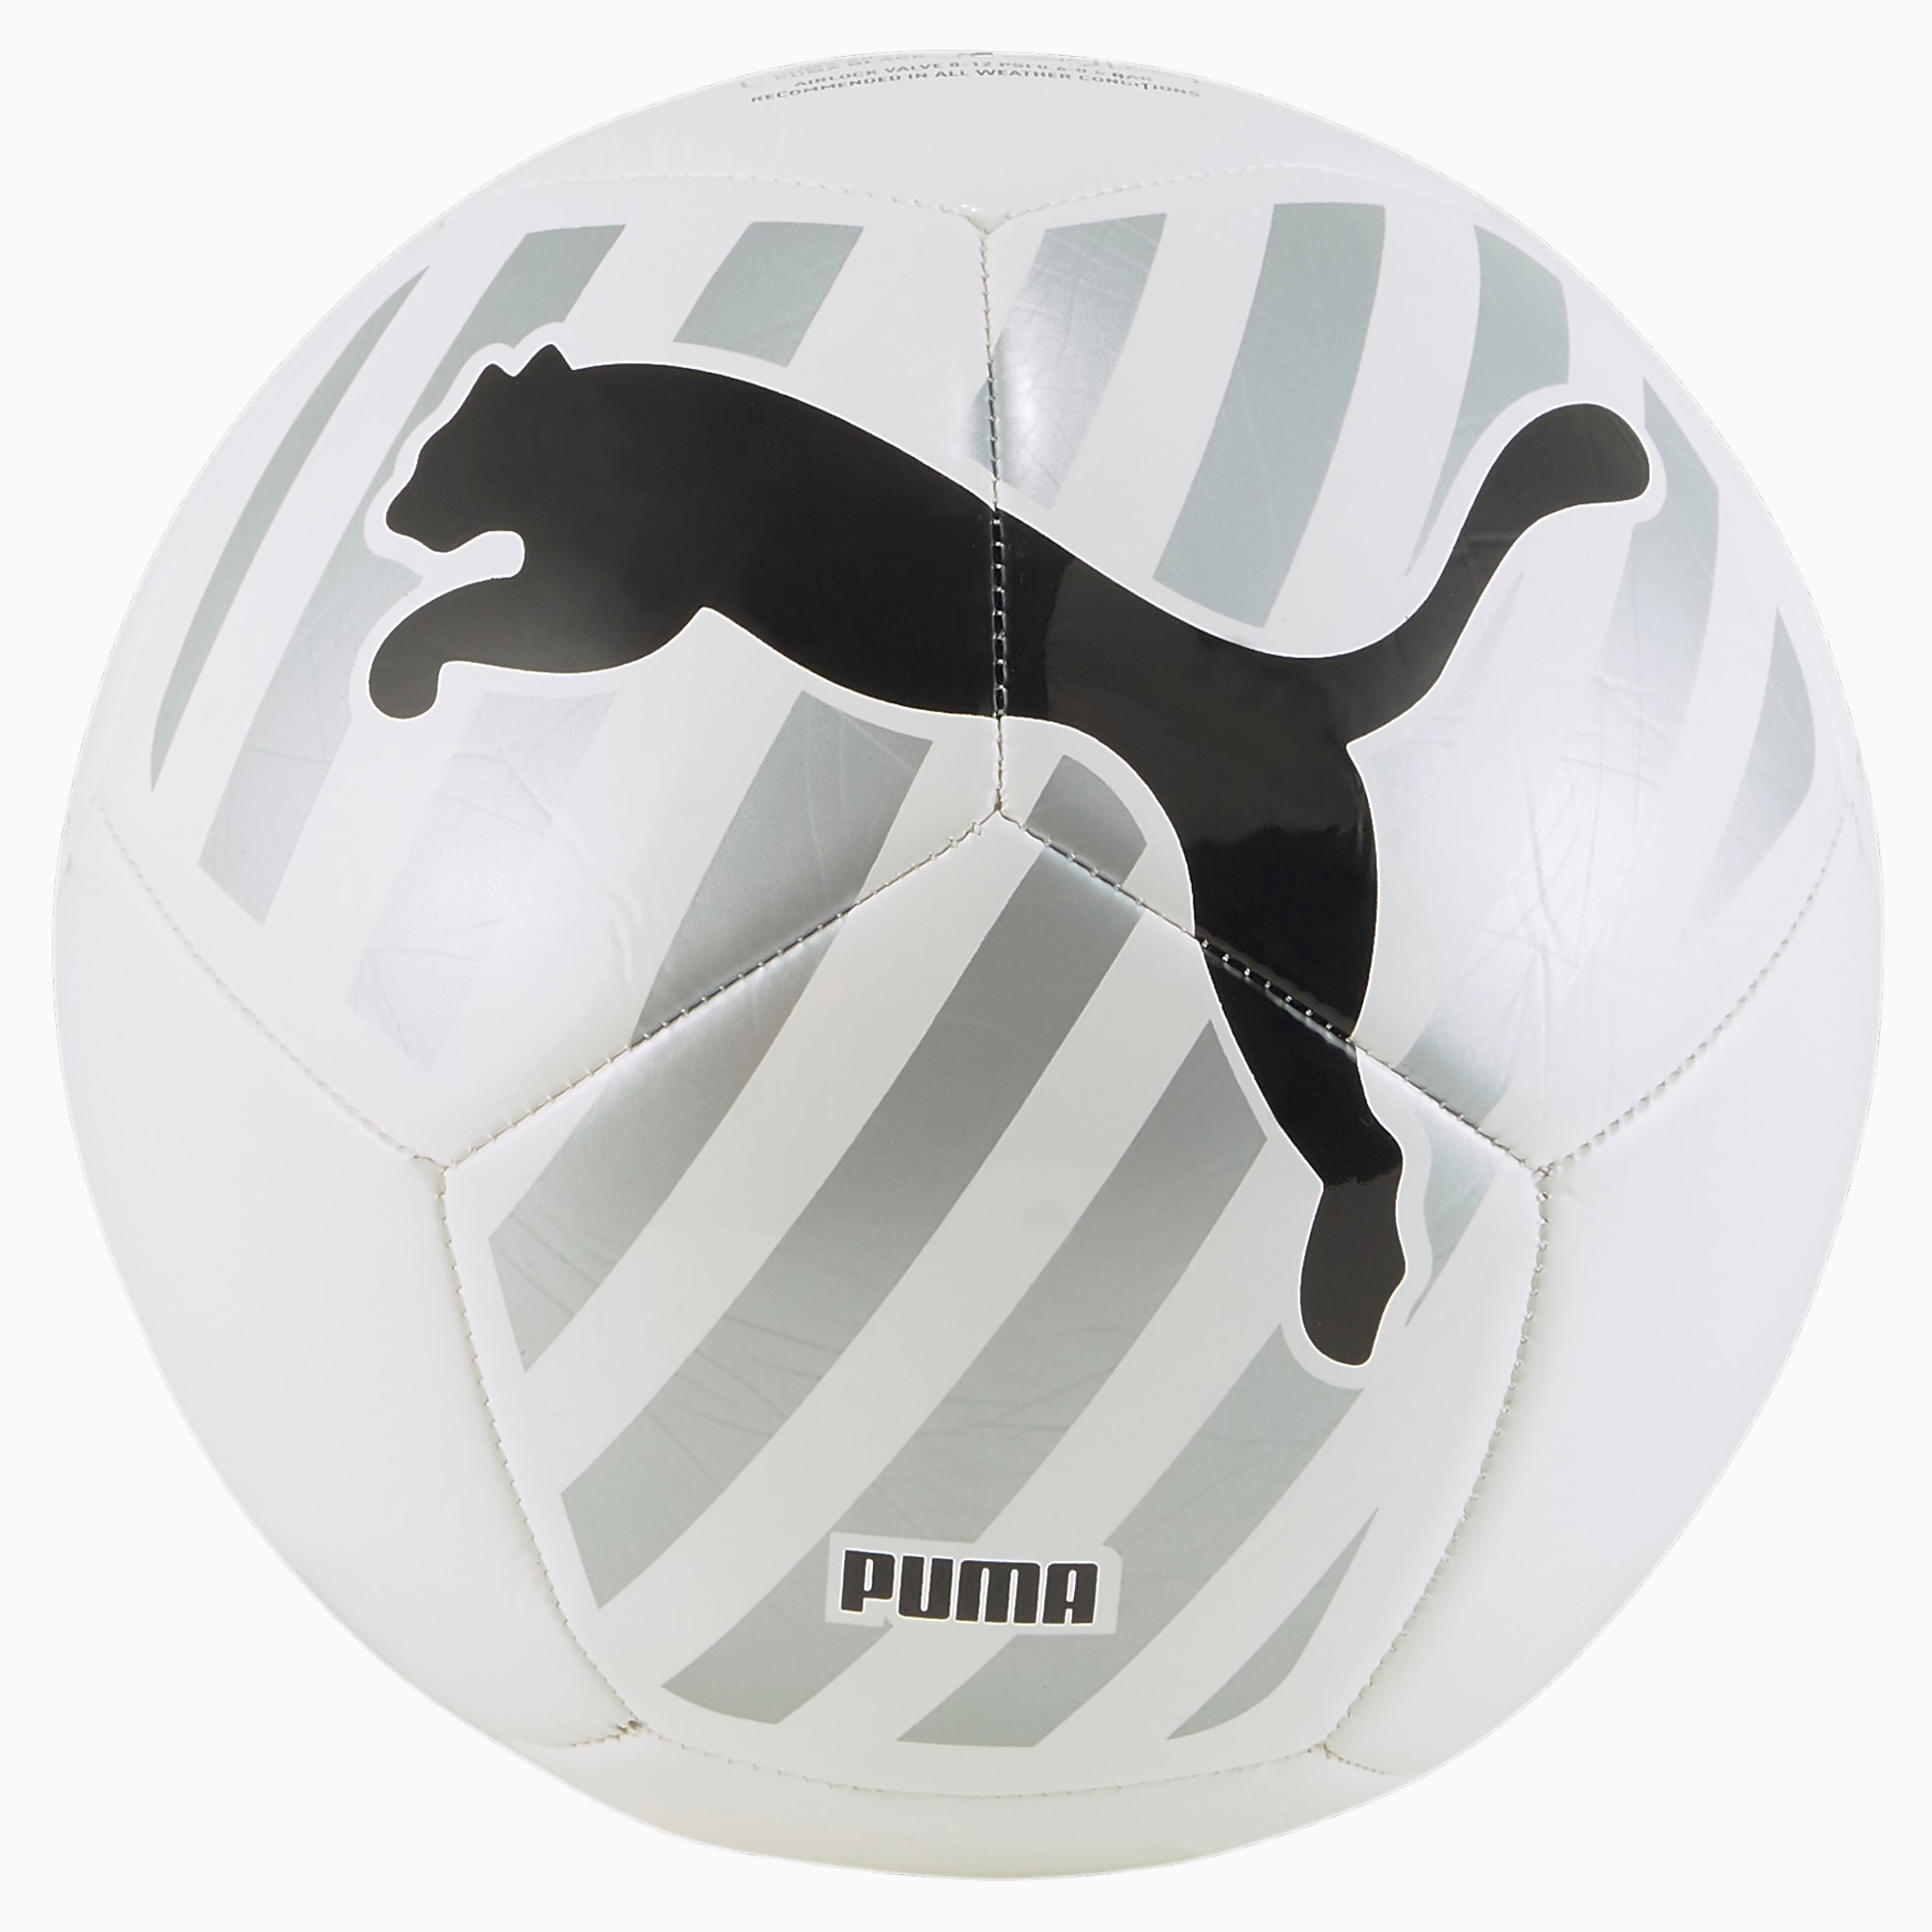 Puma voetbal big cat - maat 4 - wit/grijs